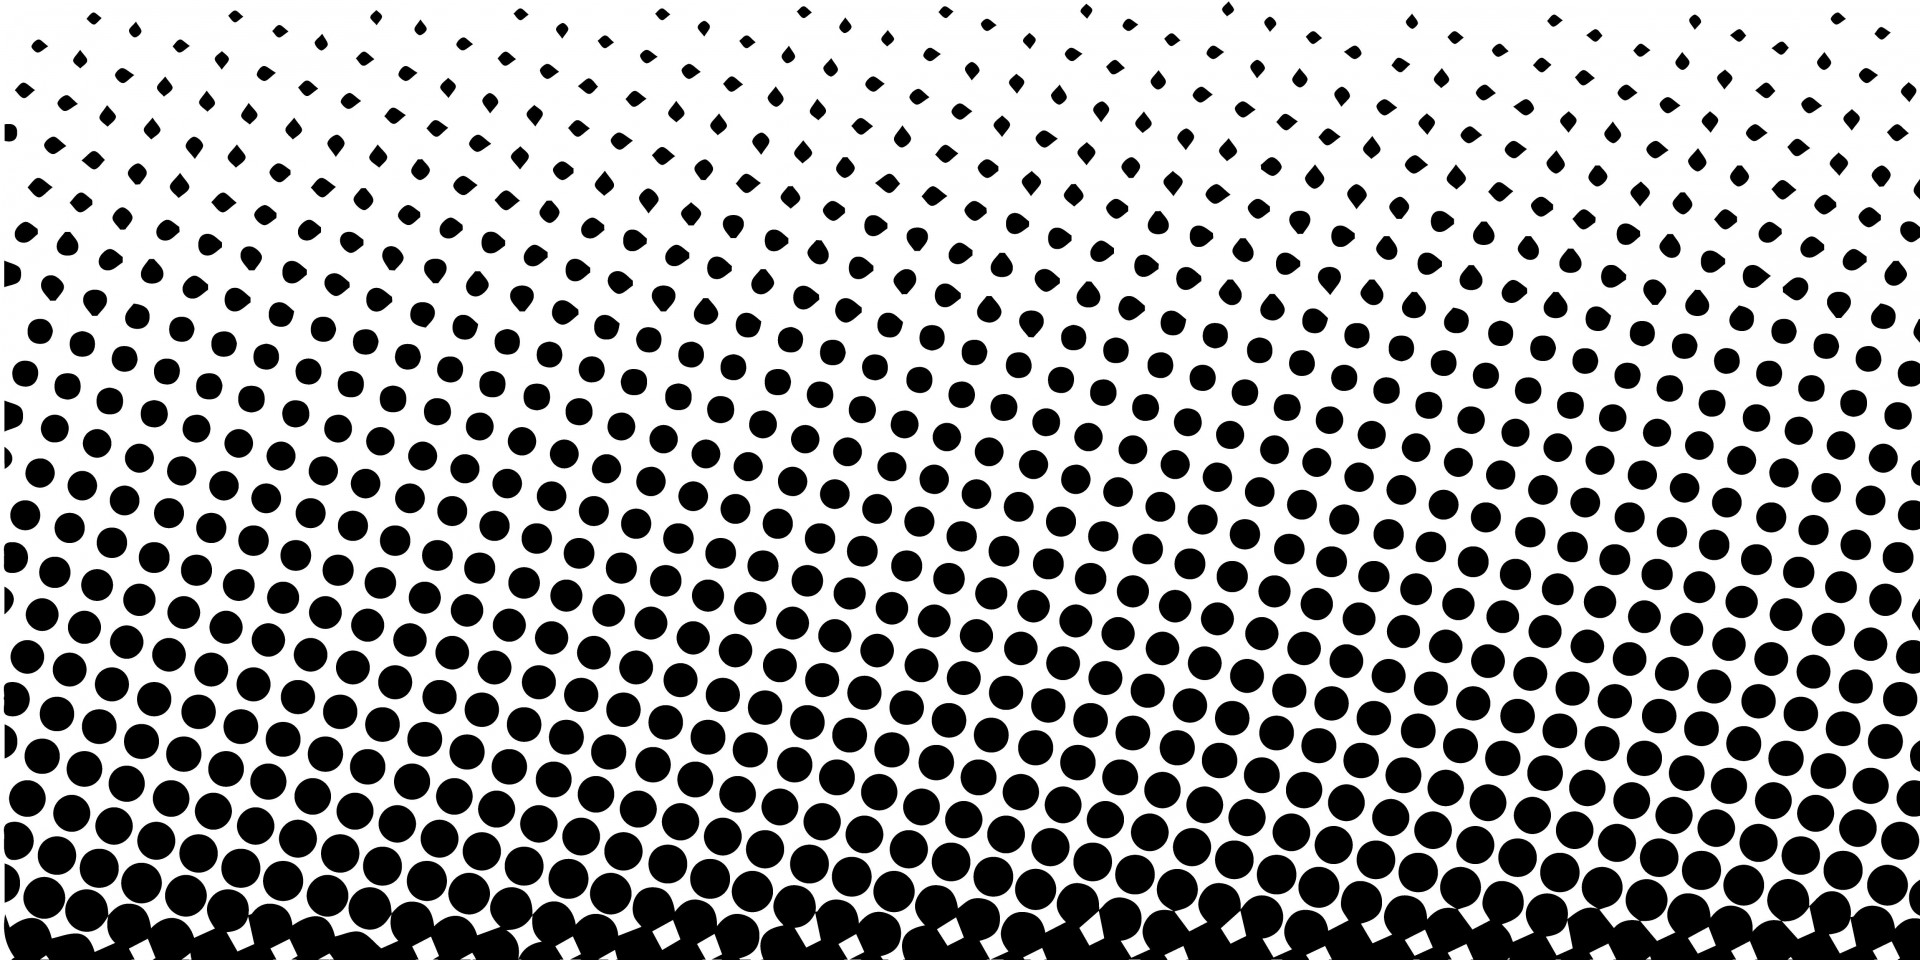 Free Vector Halftone Dot Pattern